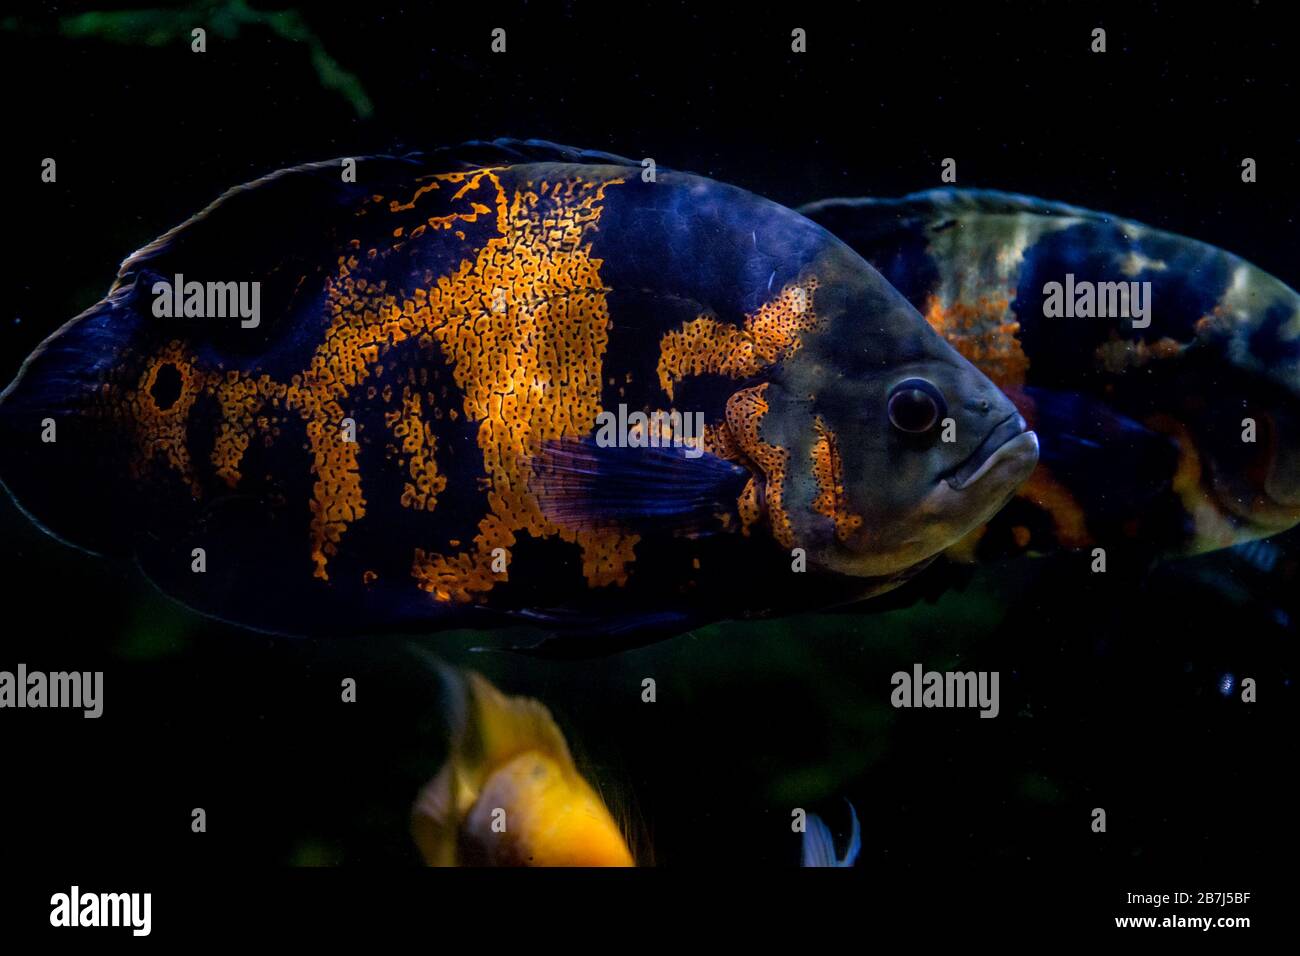 Freshwater aquarium fish, The oscar (Astronotus ocellatus) Stock Photo